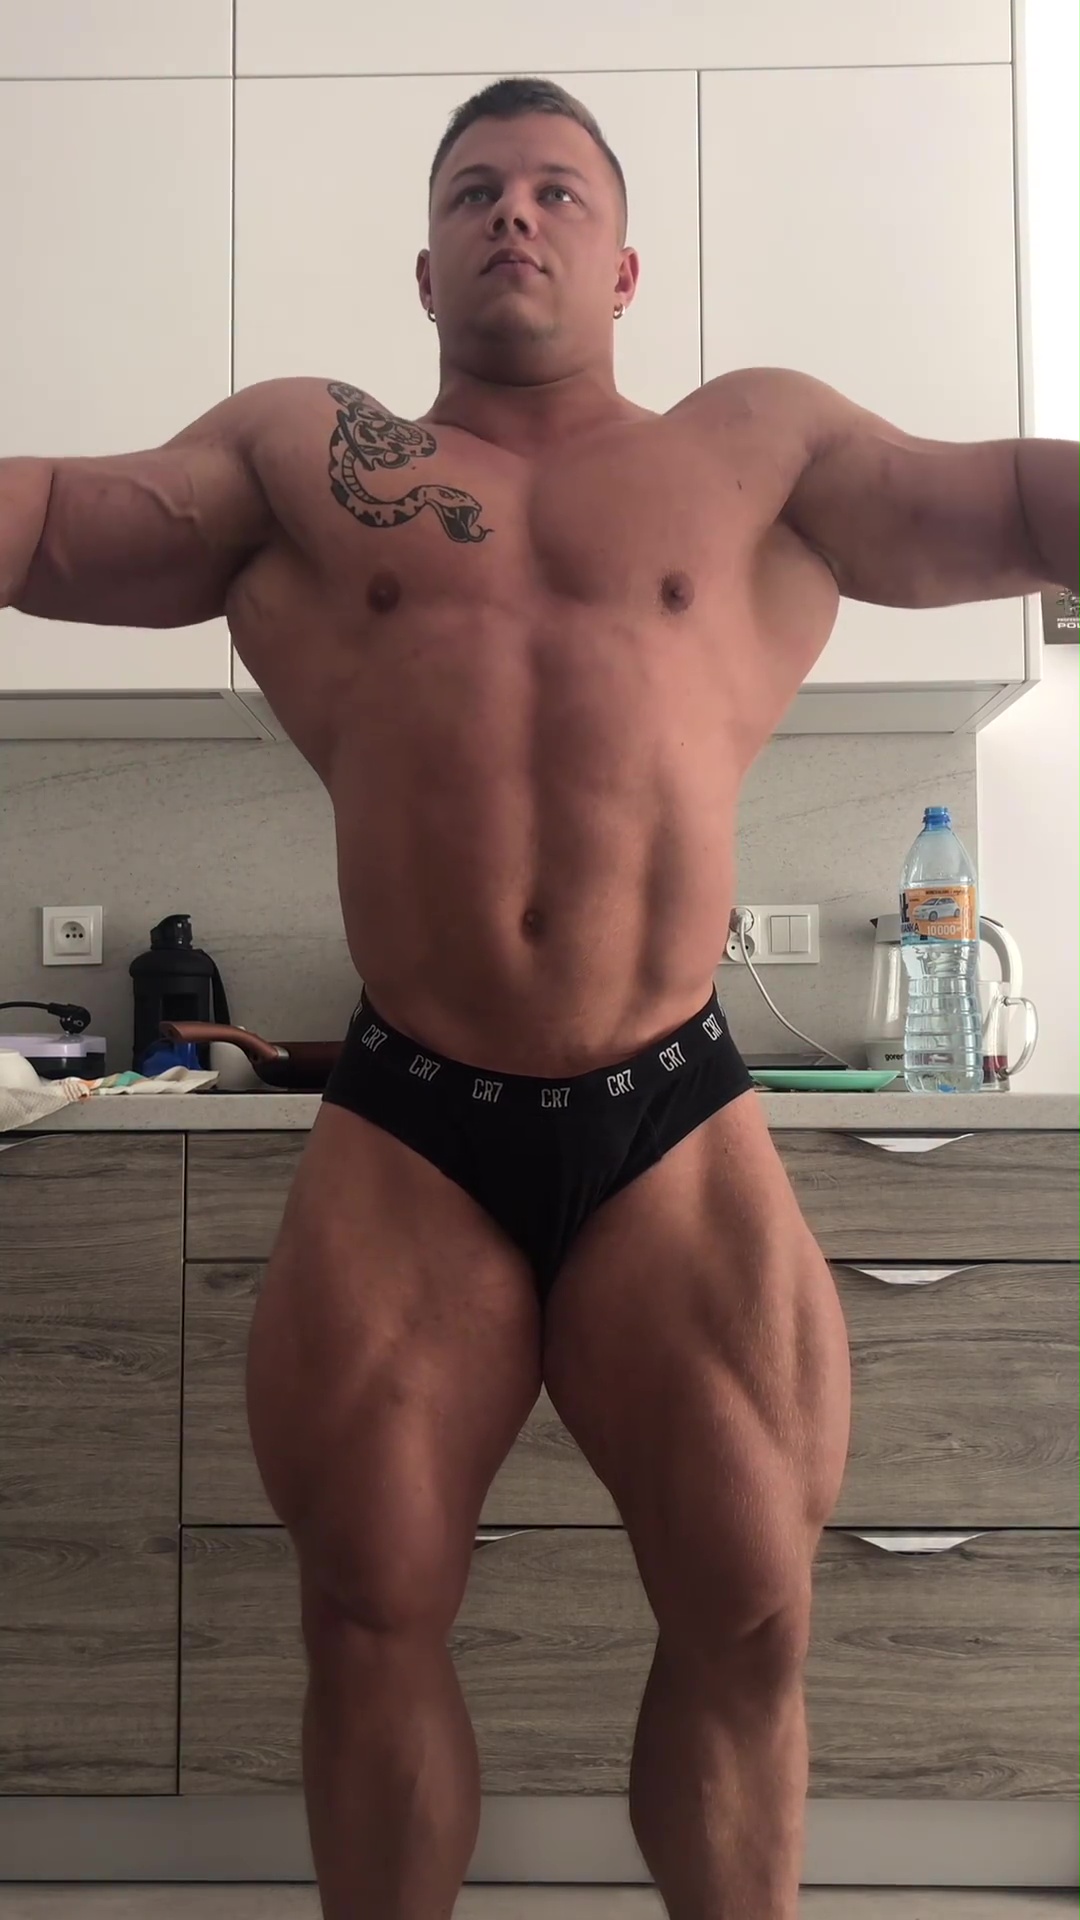 Wow!!-Sexy bodybuilder posing